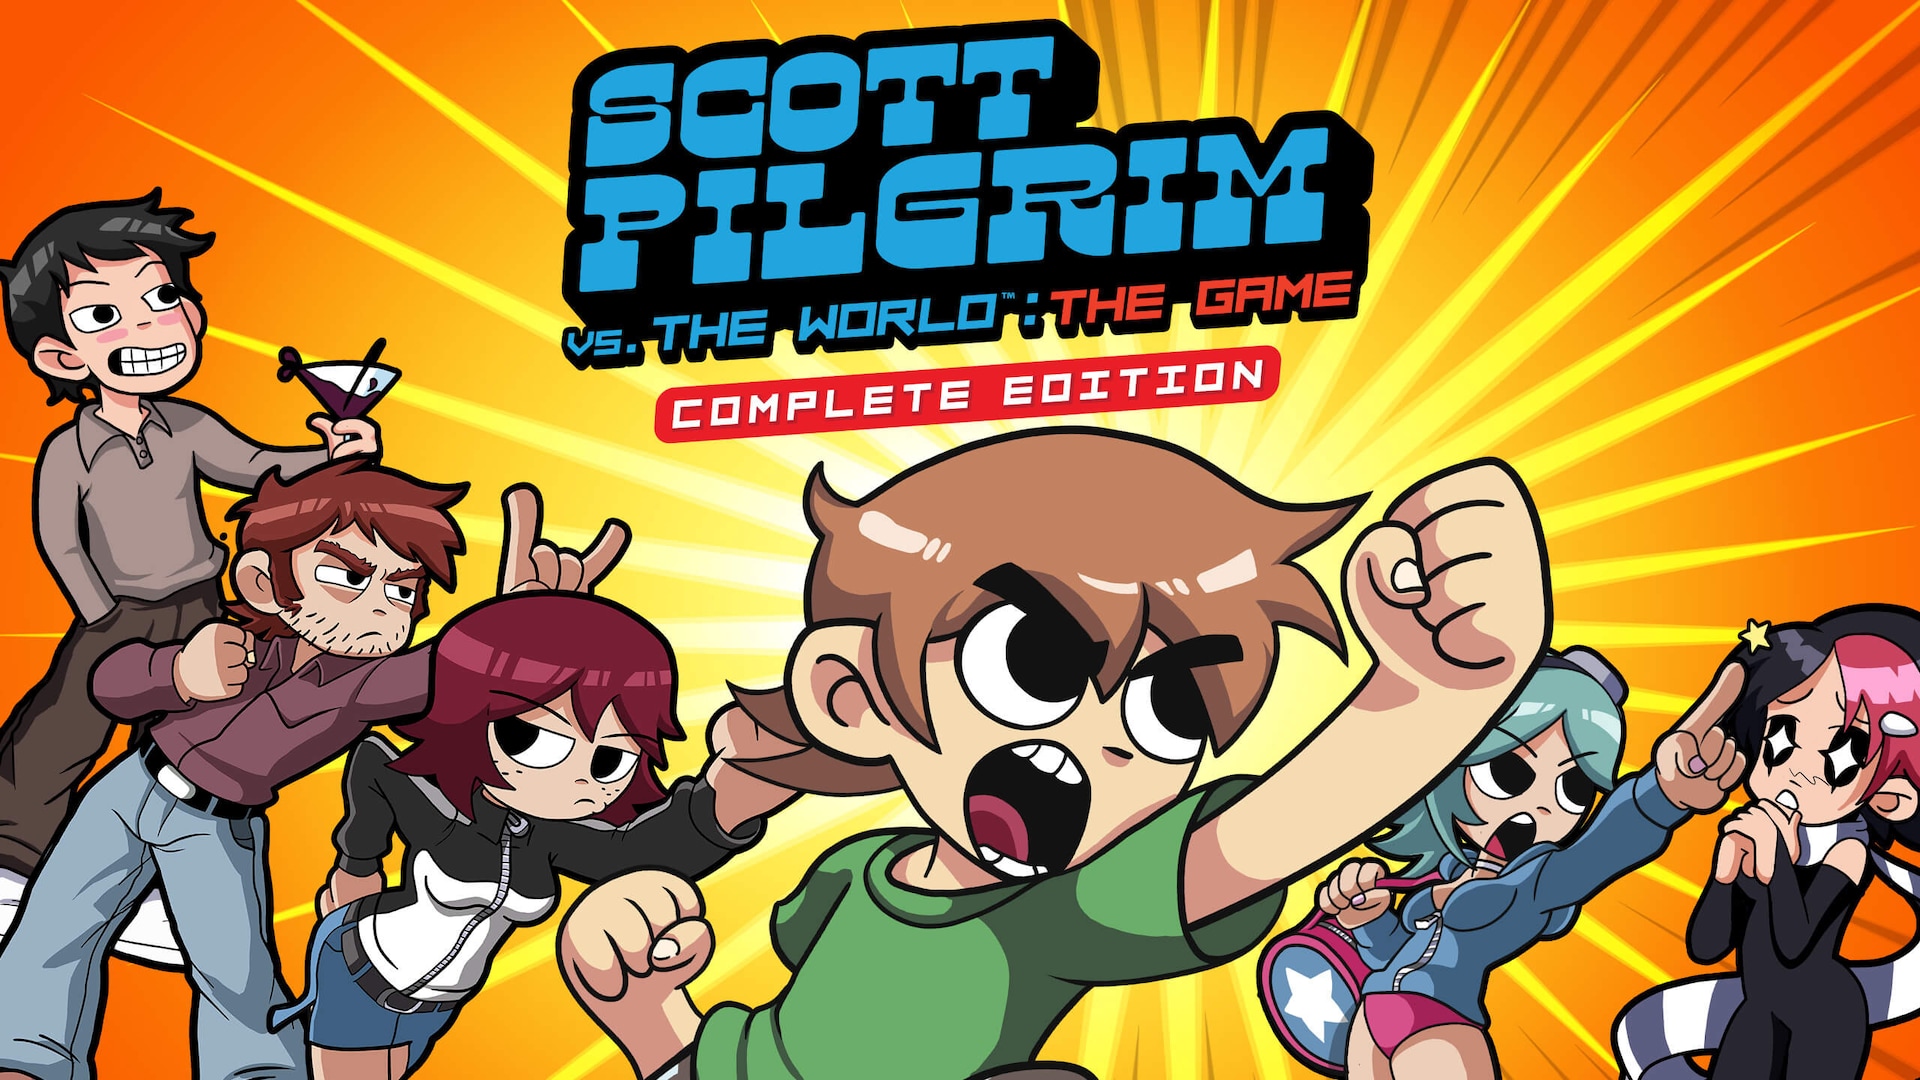 Scott Pilgrim Vs The World The Game Complete Edition